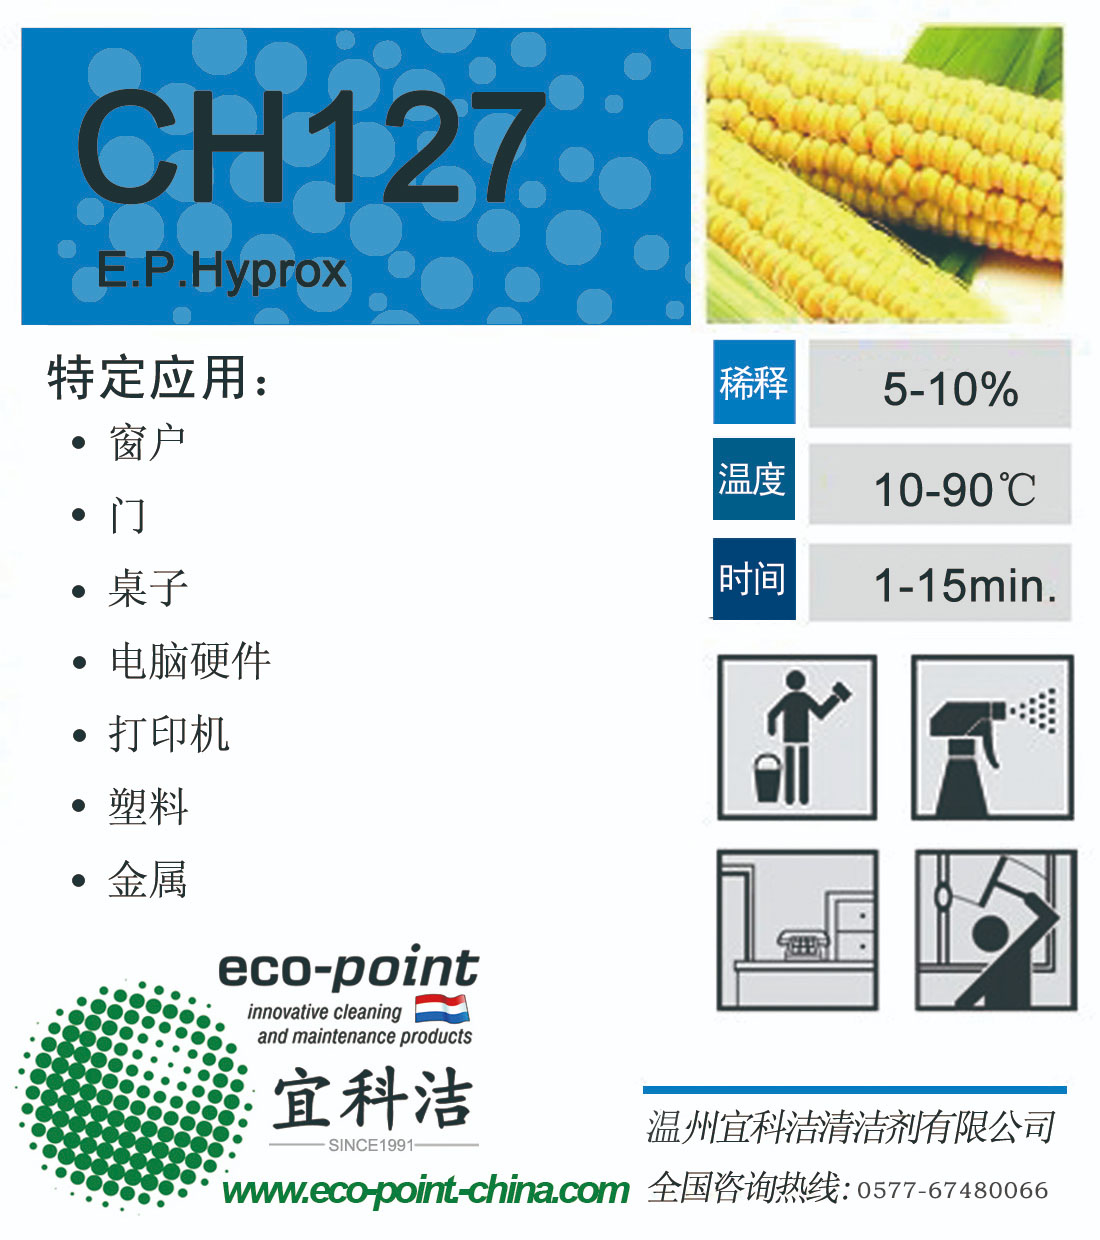 CH127-中性除油/灰尘(弱、快速挥发)